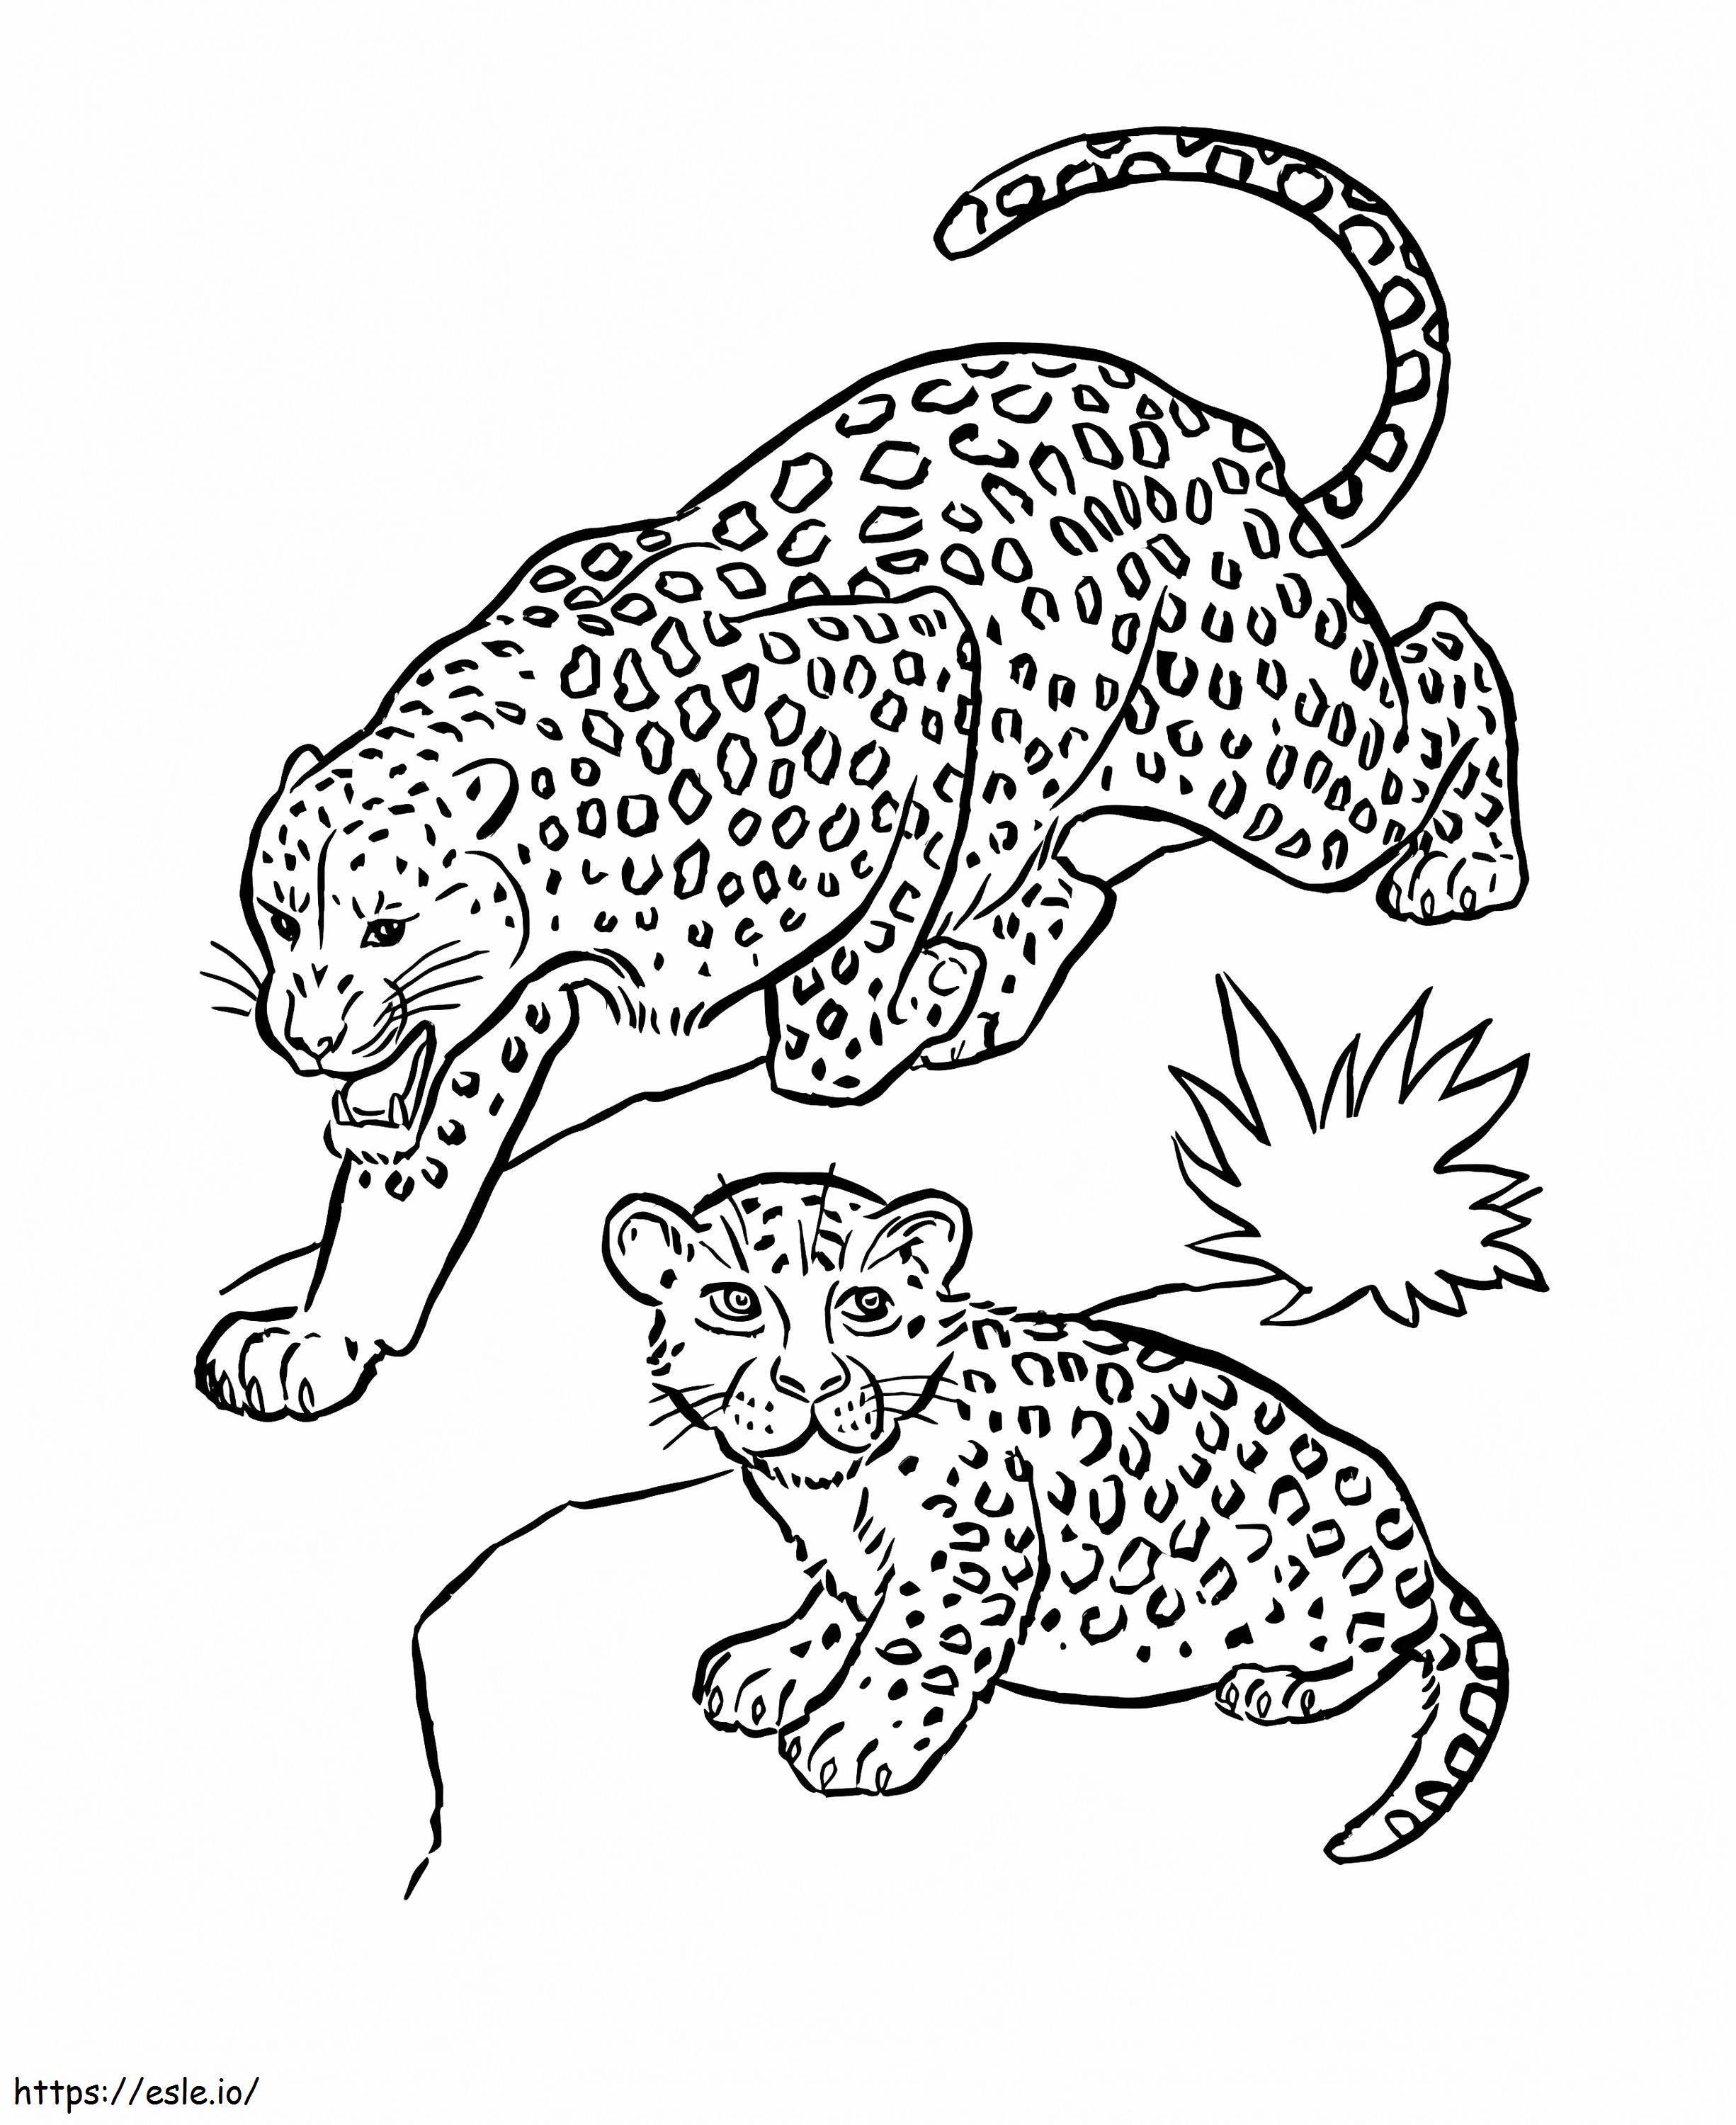 Zwei Jaguare ausmalbilder